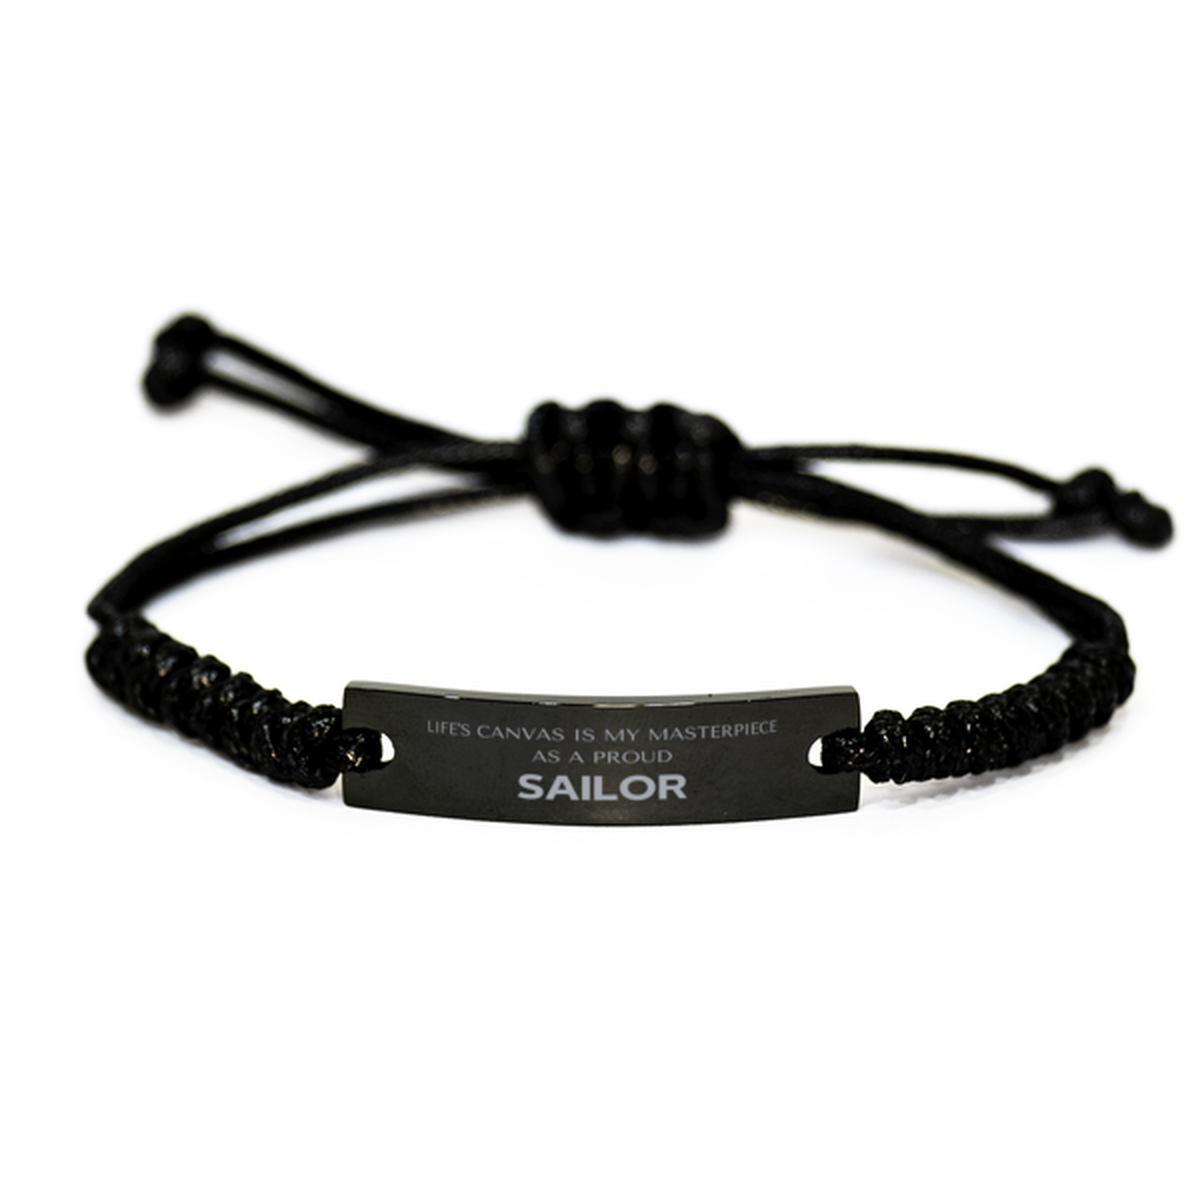 Proud Sailor Gifts, Life's canvas is my masterpiece, Epic Birthday Christmas Unique Black Rope Bracelet For Sailor, Coworkers, Men, Women, Friends